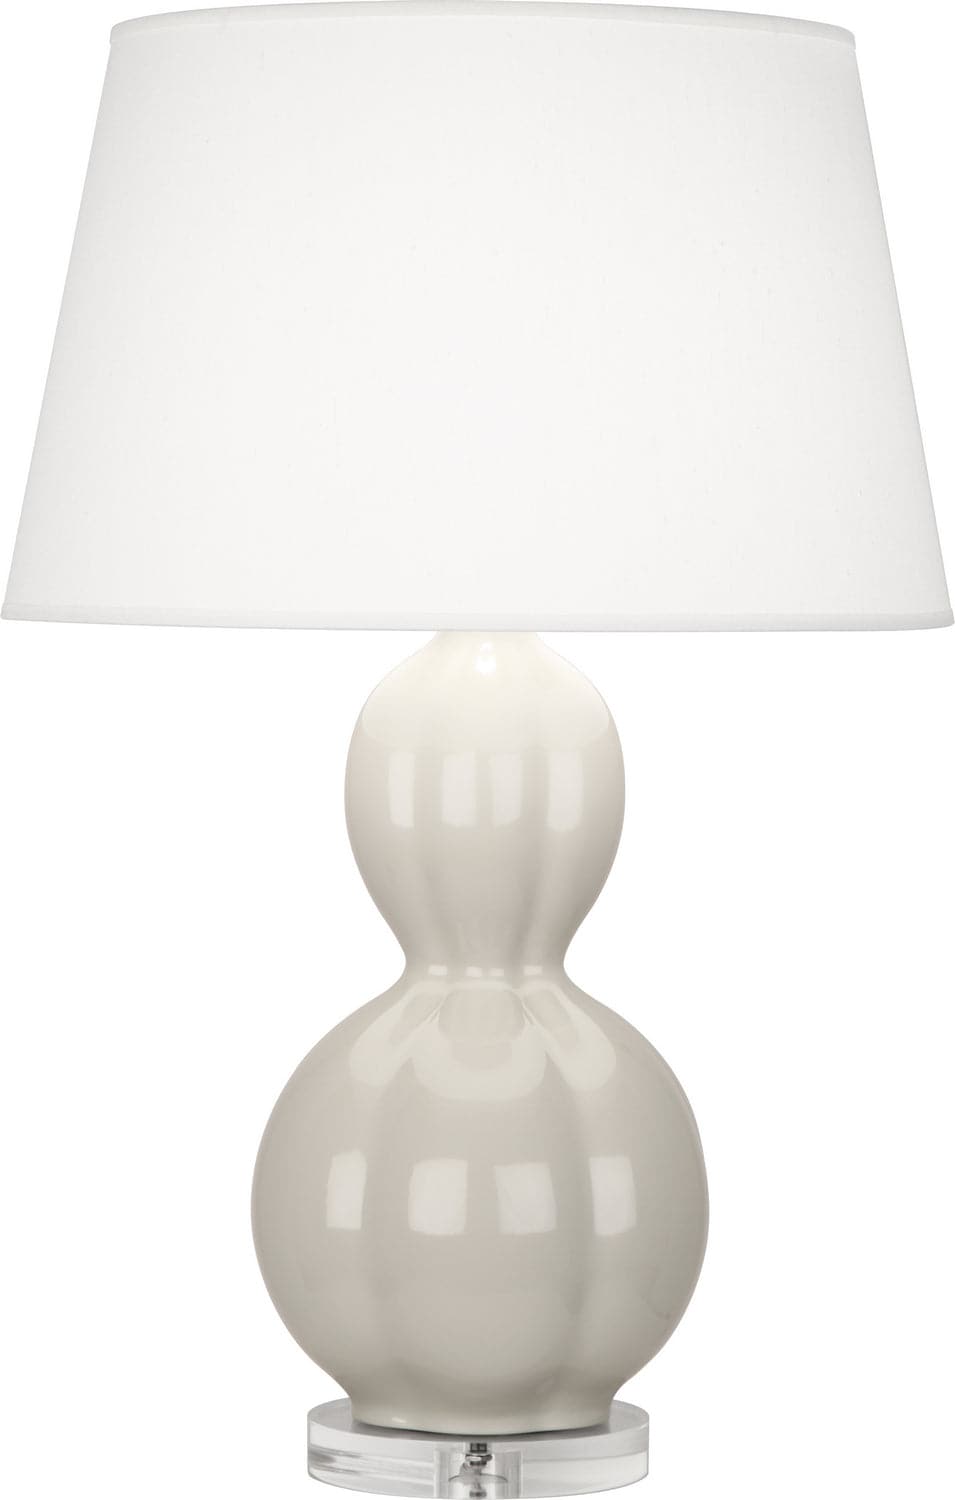 Robert Abbey - BW997 - One Light Table Lamp - Williamsburg Randolph - Soft Gray Glazed w/Lucite Base